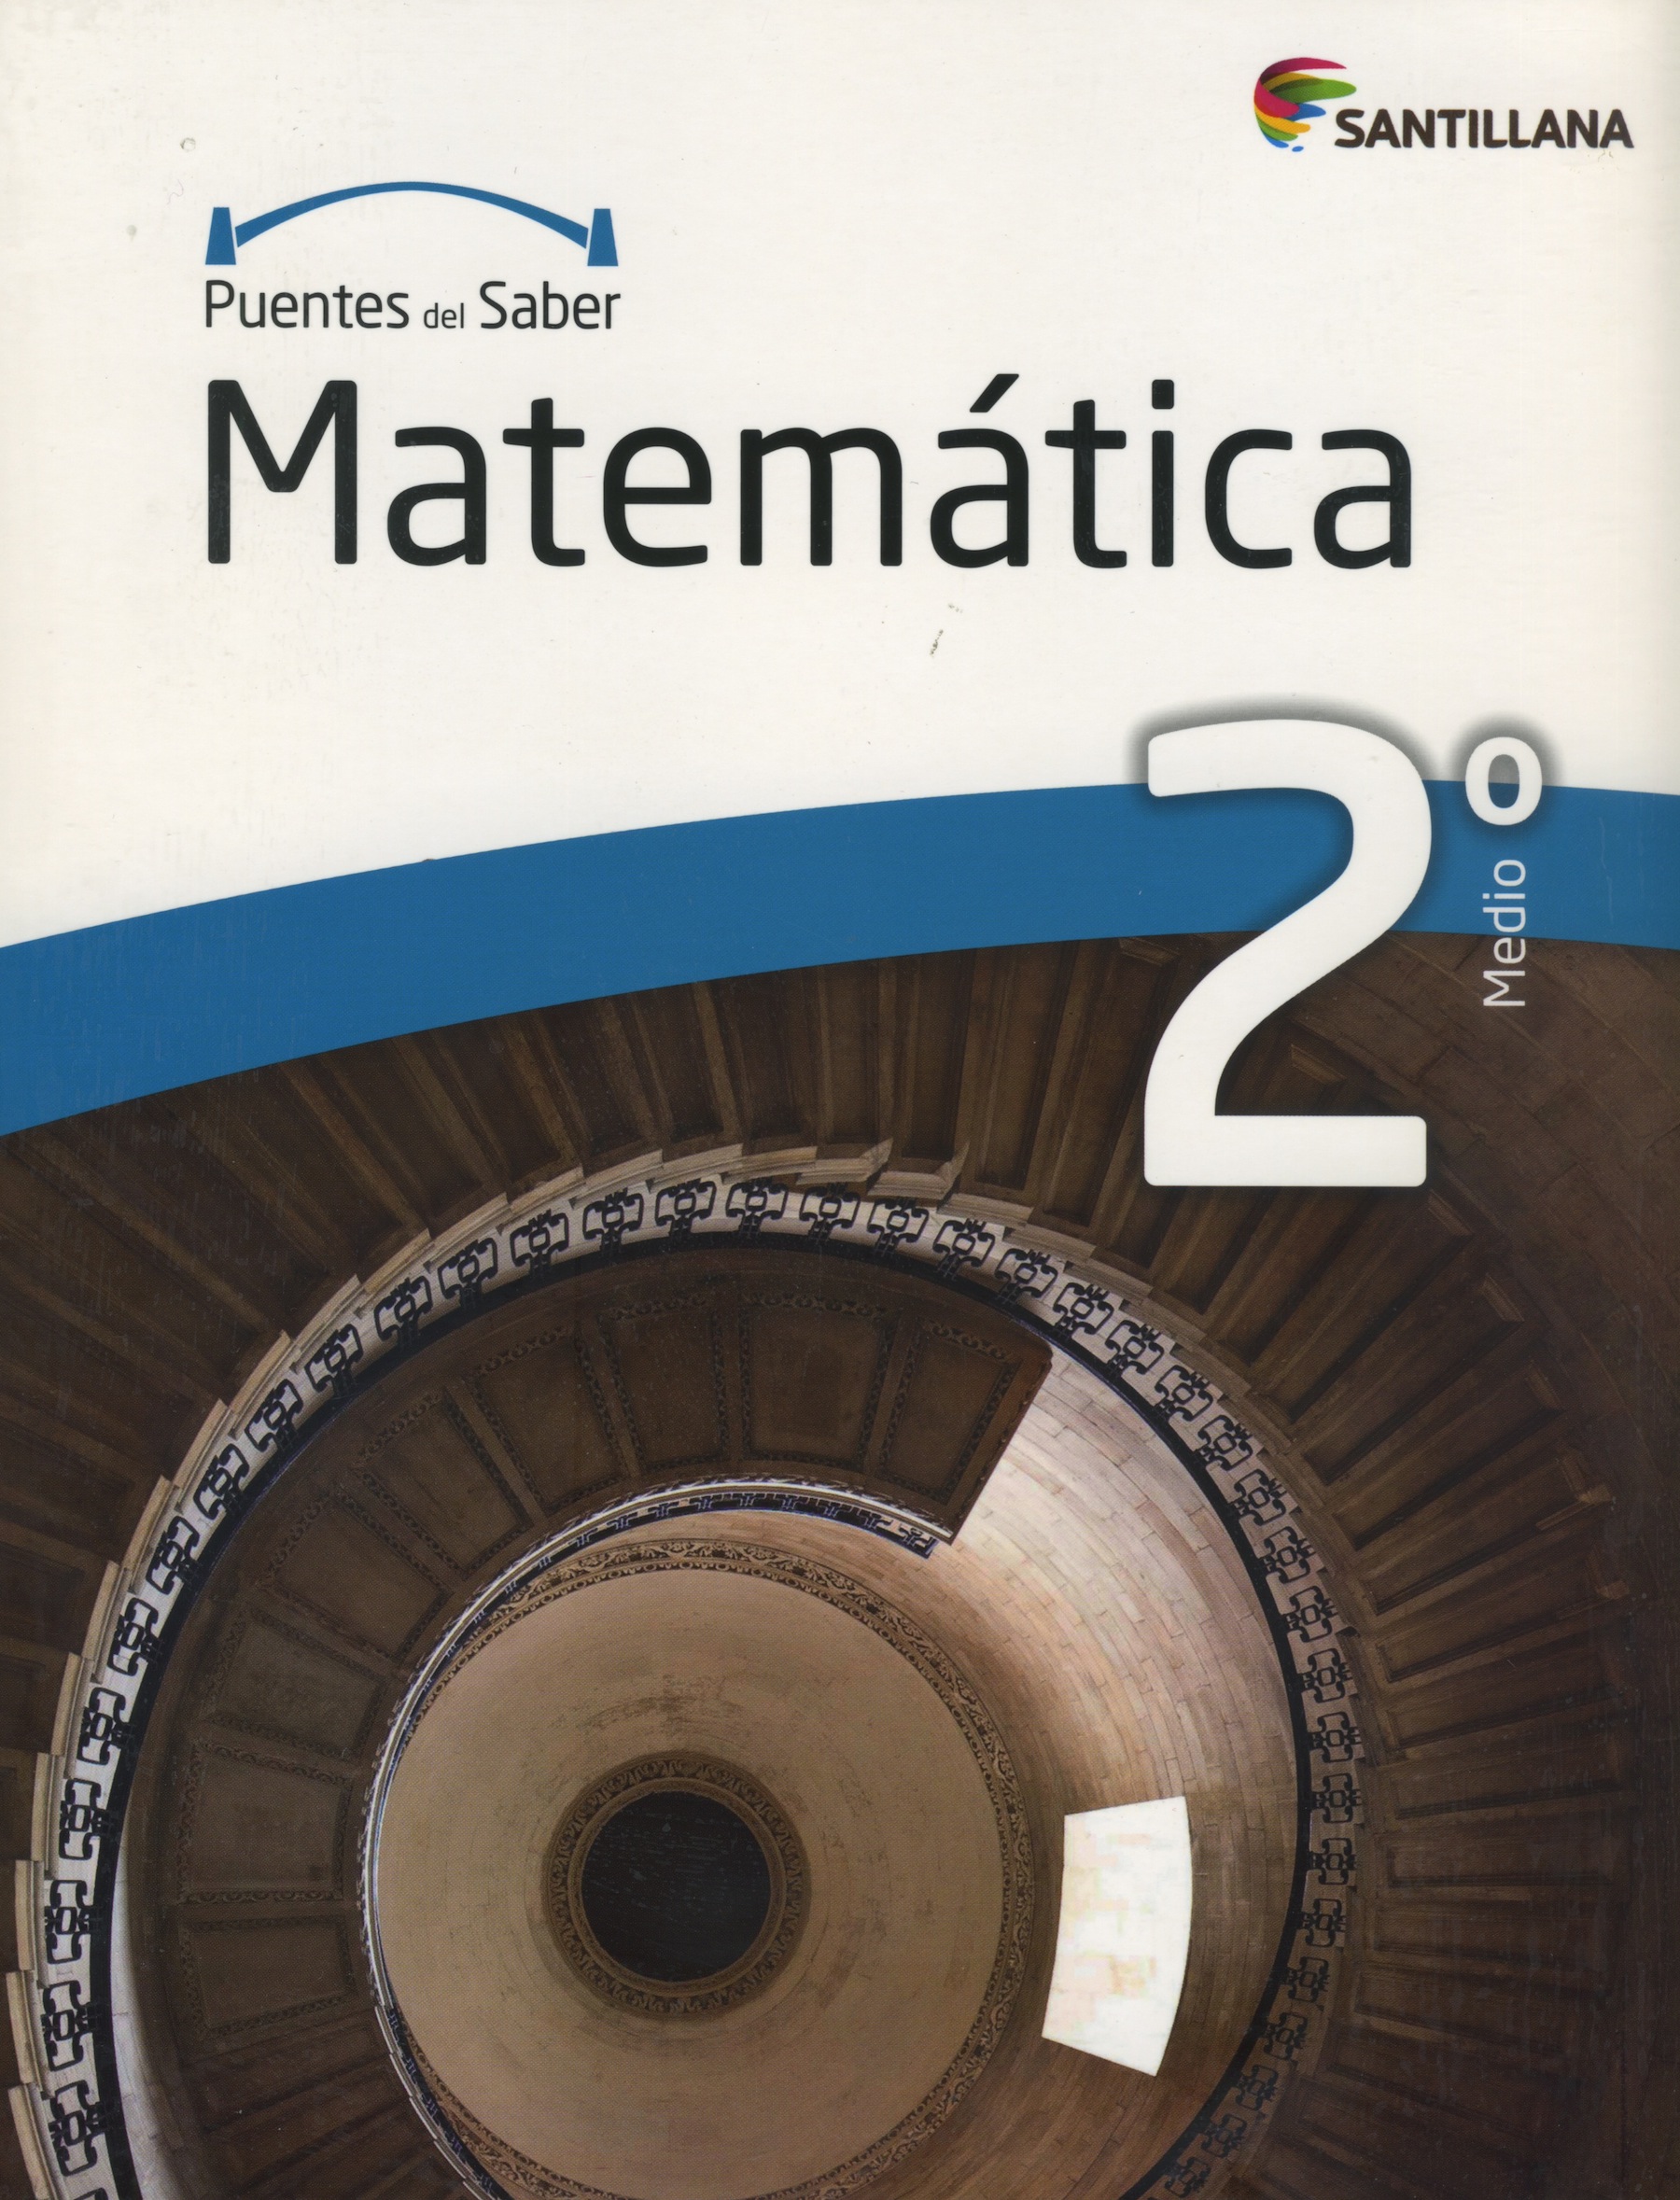 Portada del libro Matematica 2º Medio, serie Puentes del saber, Editorial Santillana